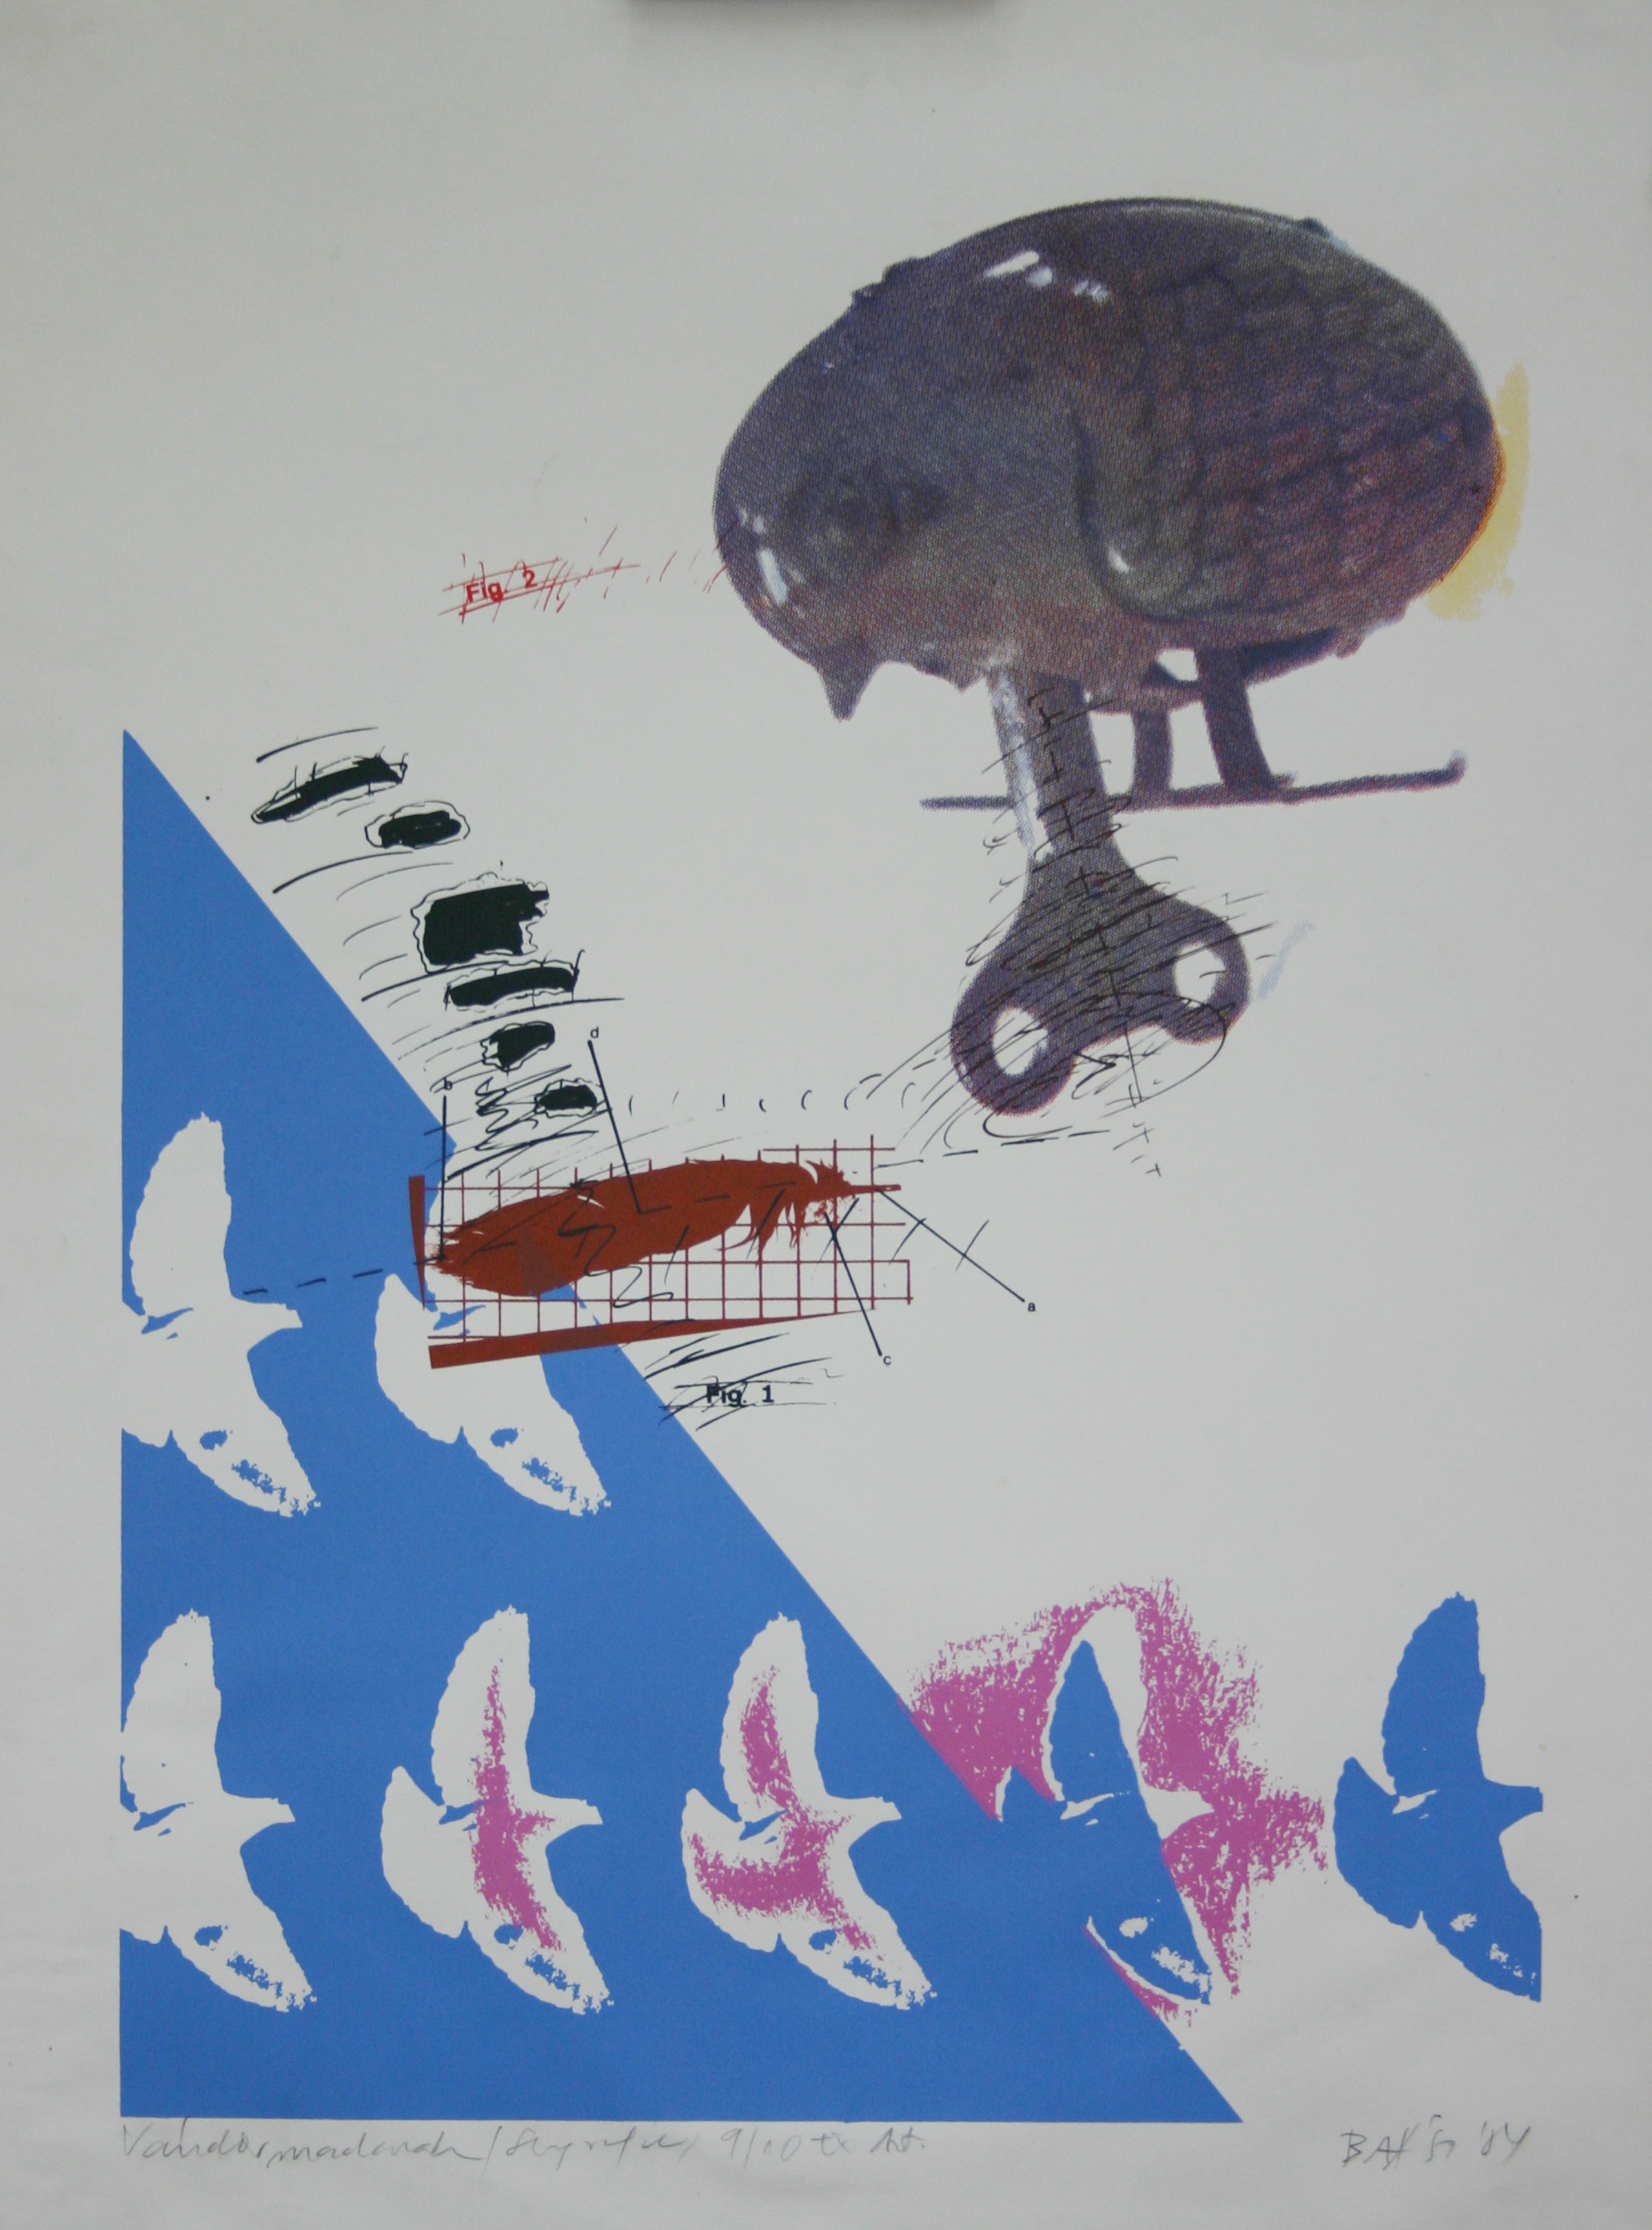 Imre Baász: Migrating Birds, silkscreen print, 54x35.5 cm, 1984